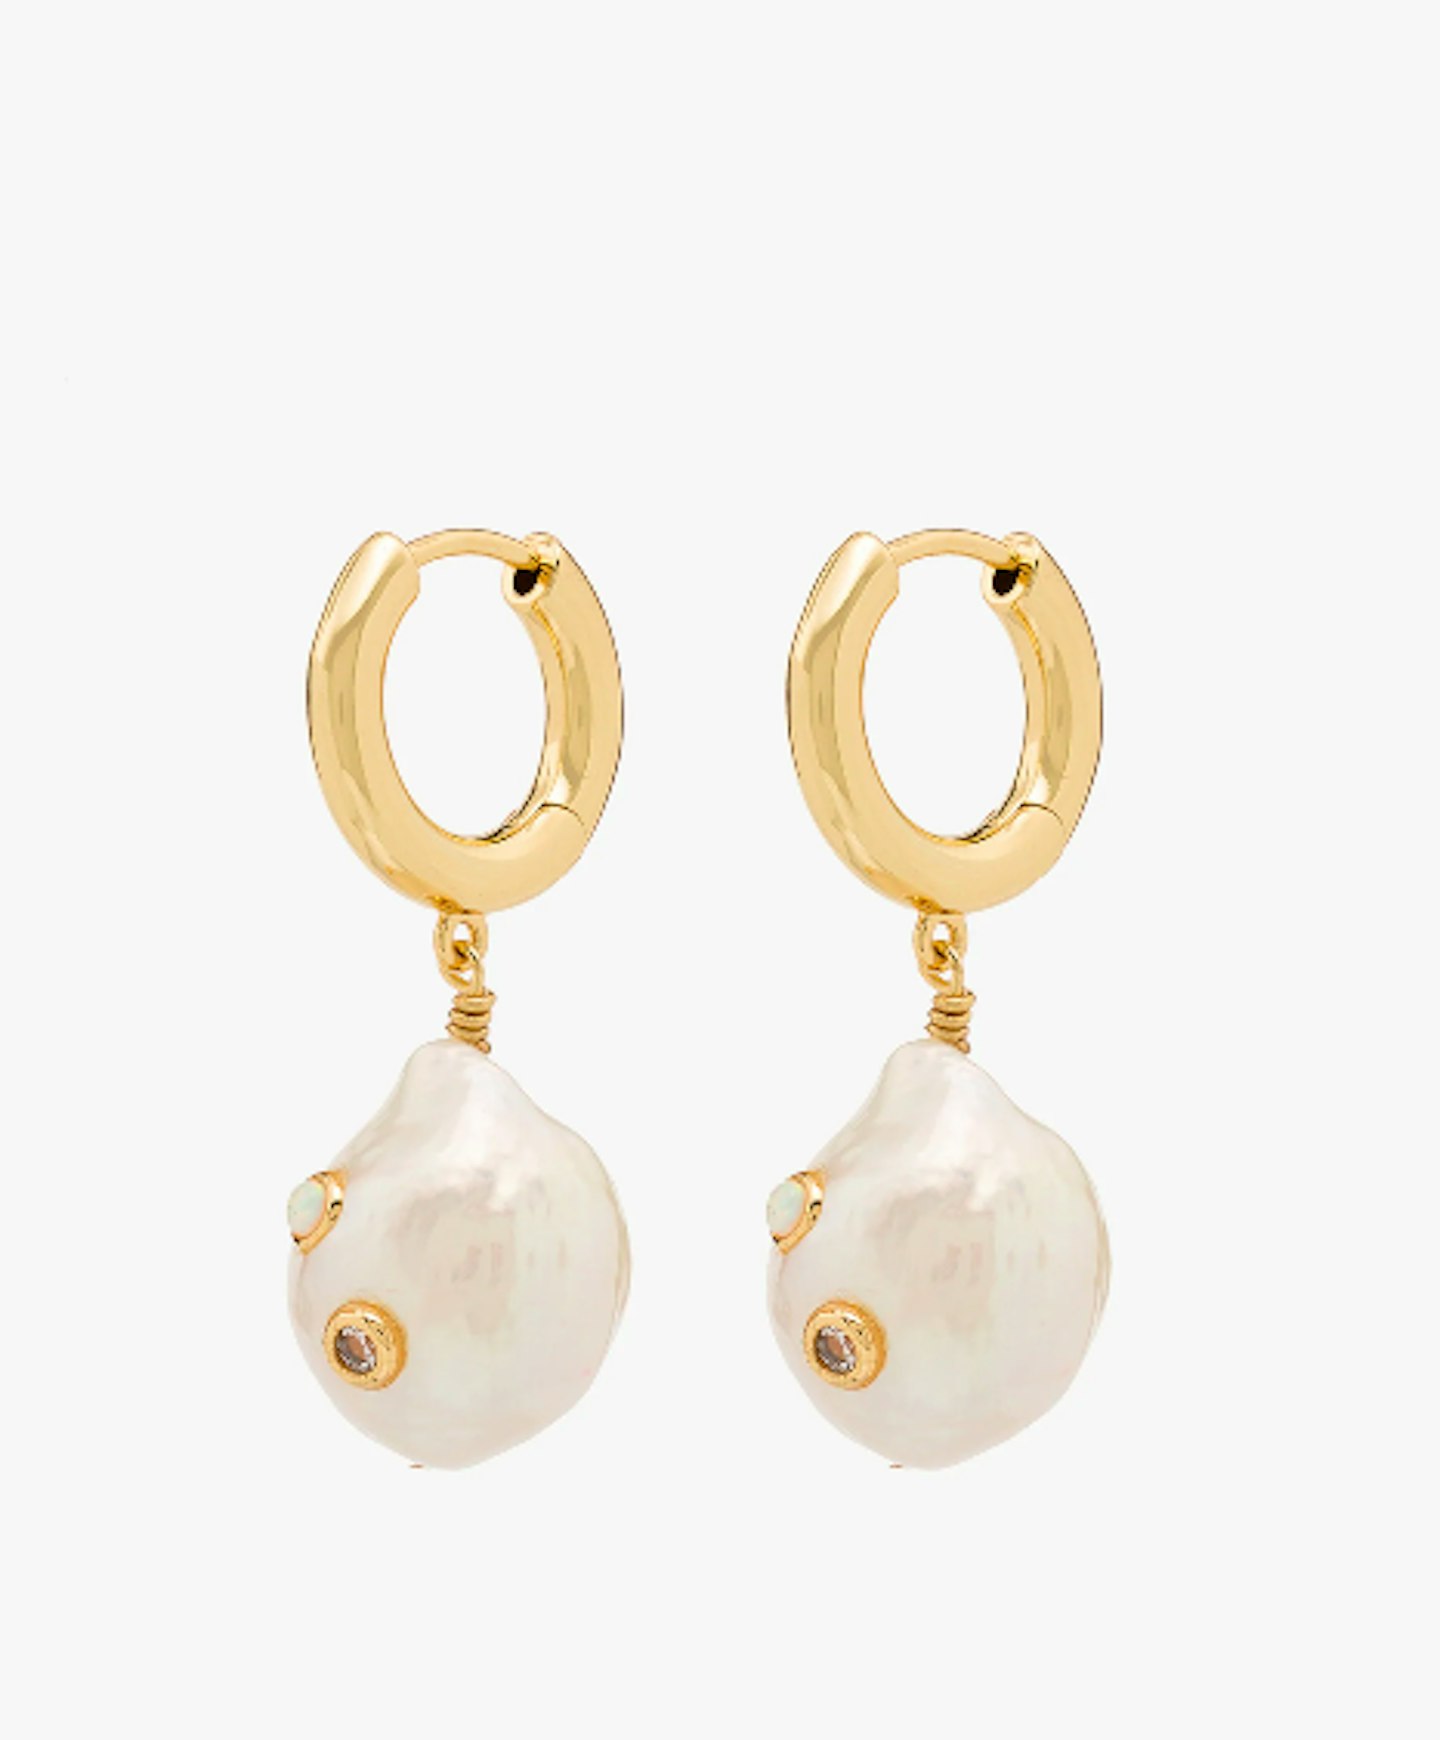 Cancer - Anni Lu, 18K Gold-Plated Gertrude Pearl Hoop Earrings, £210